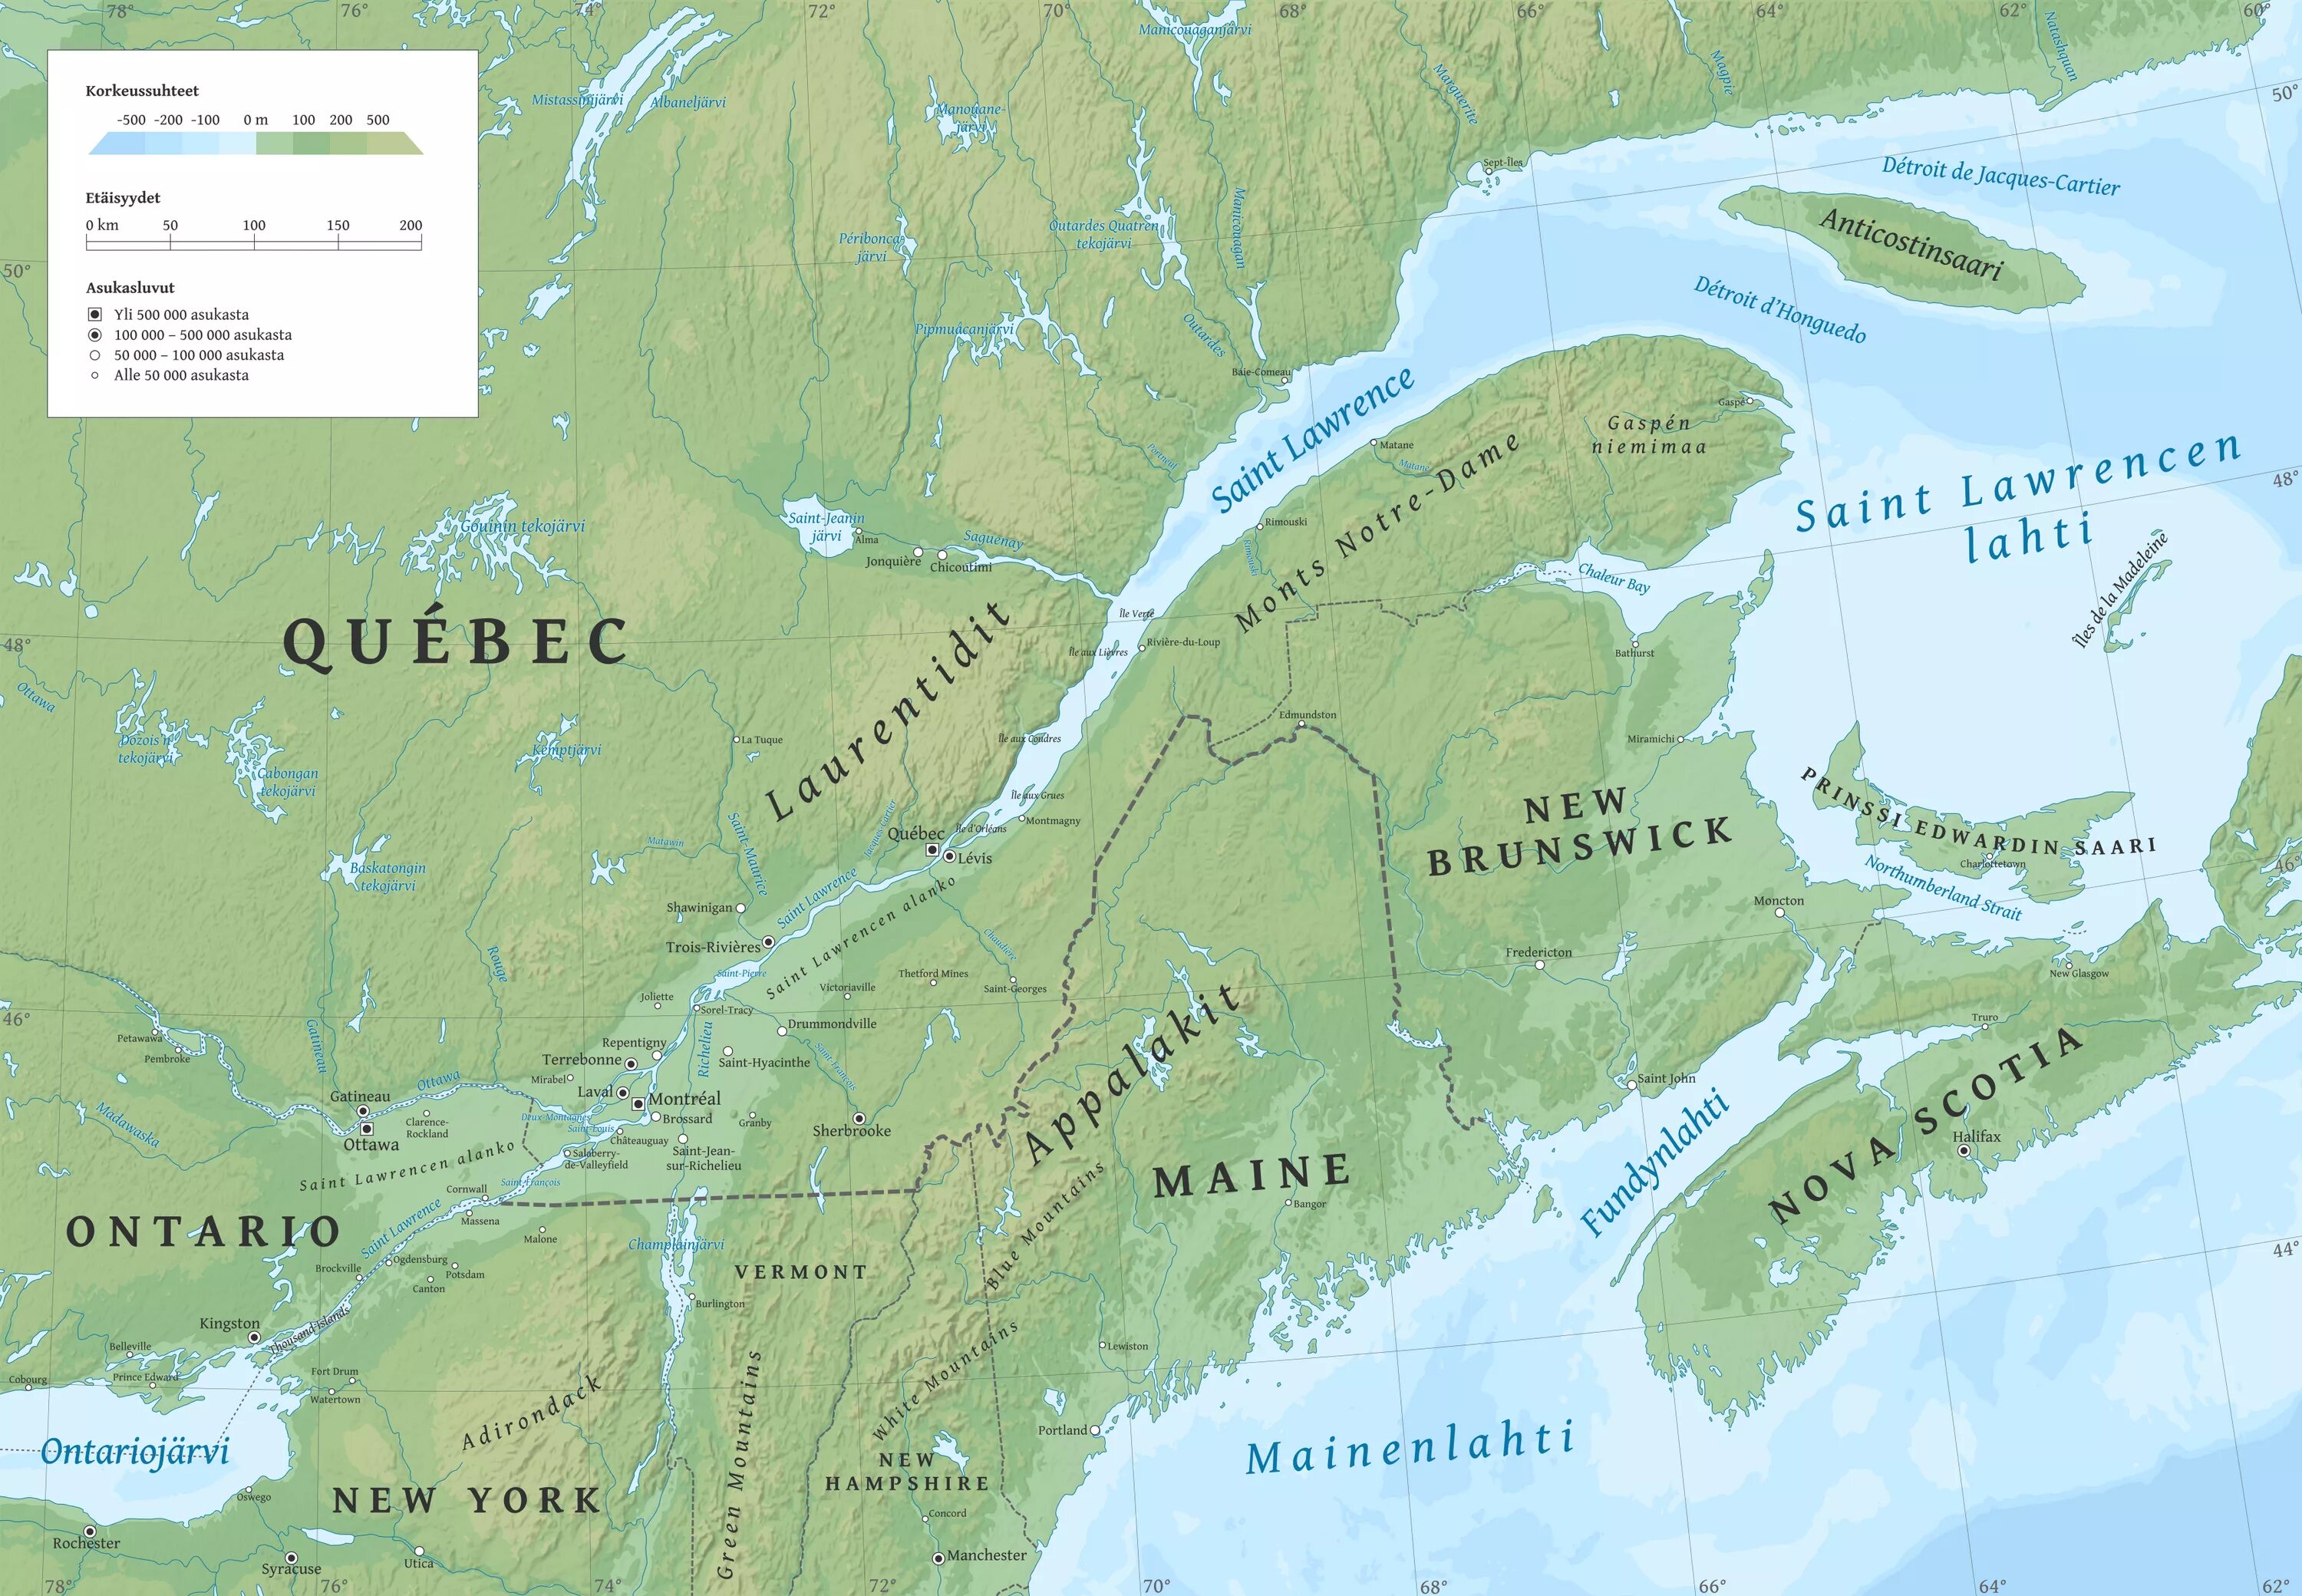 Святого лаврентия какой океан. Река Святого Лаврентия на карте Канады. Залив Святого Лаврентия на карте Северной Америки. Залив Святого Лаврентия на контурной карте Северной Америки.